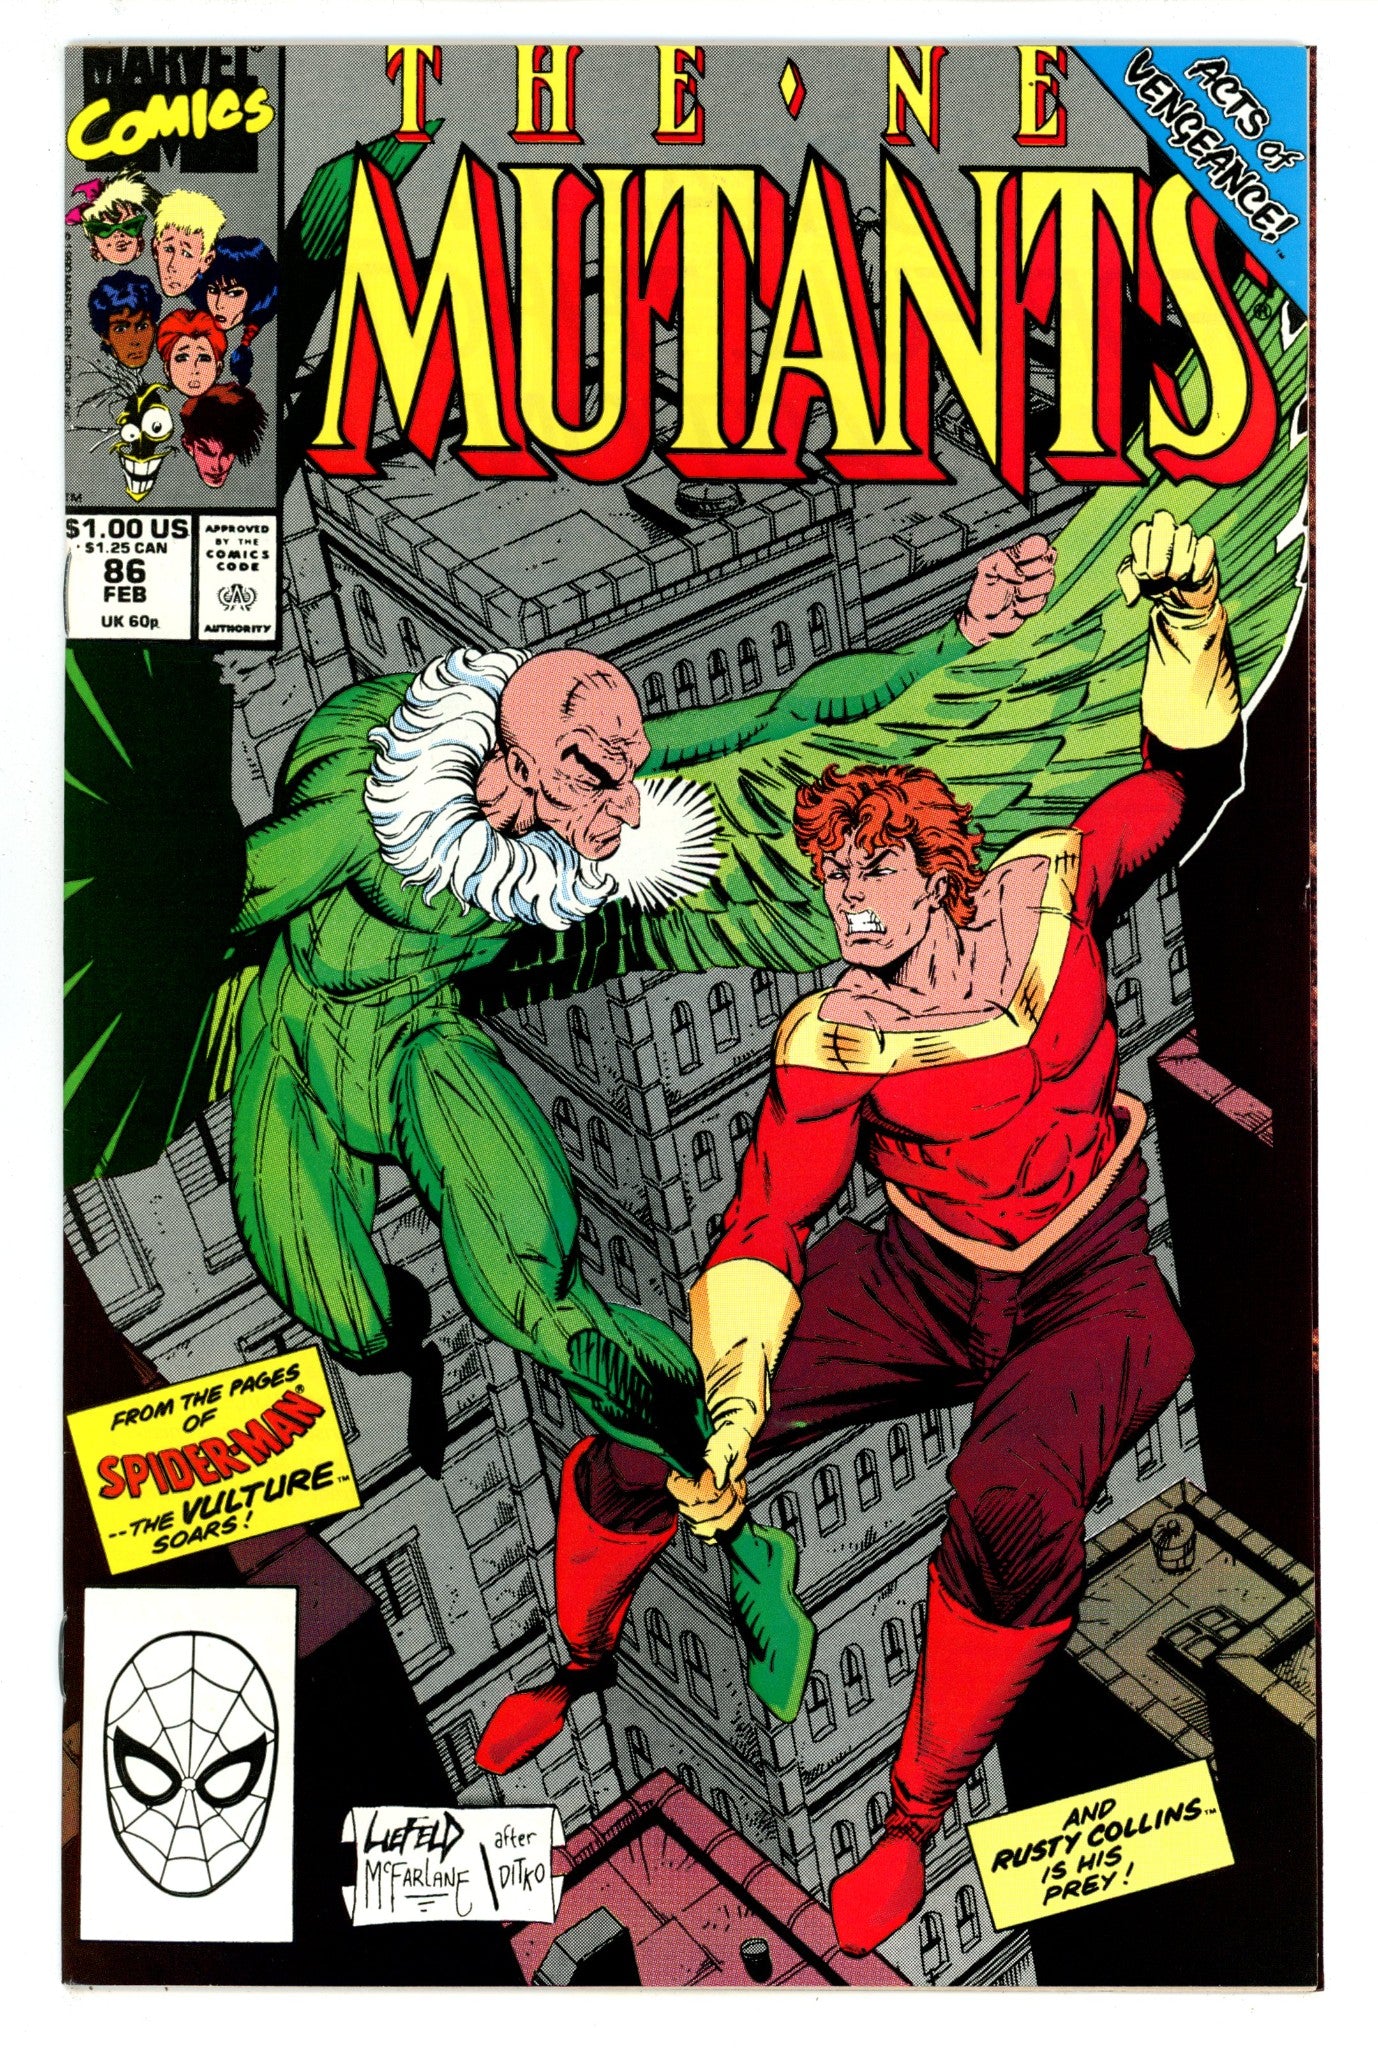 The New Mutants Vol 1 86 VF/NM (9.0) (1990) 